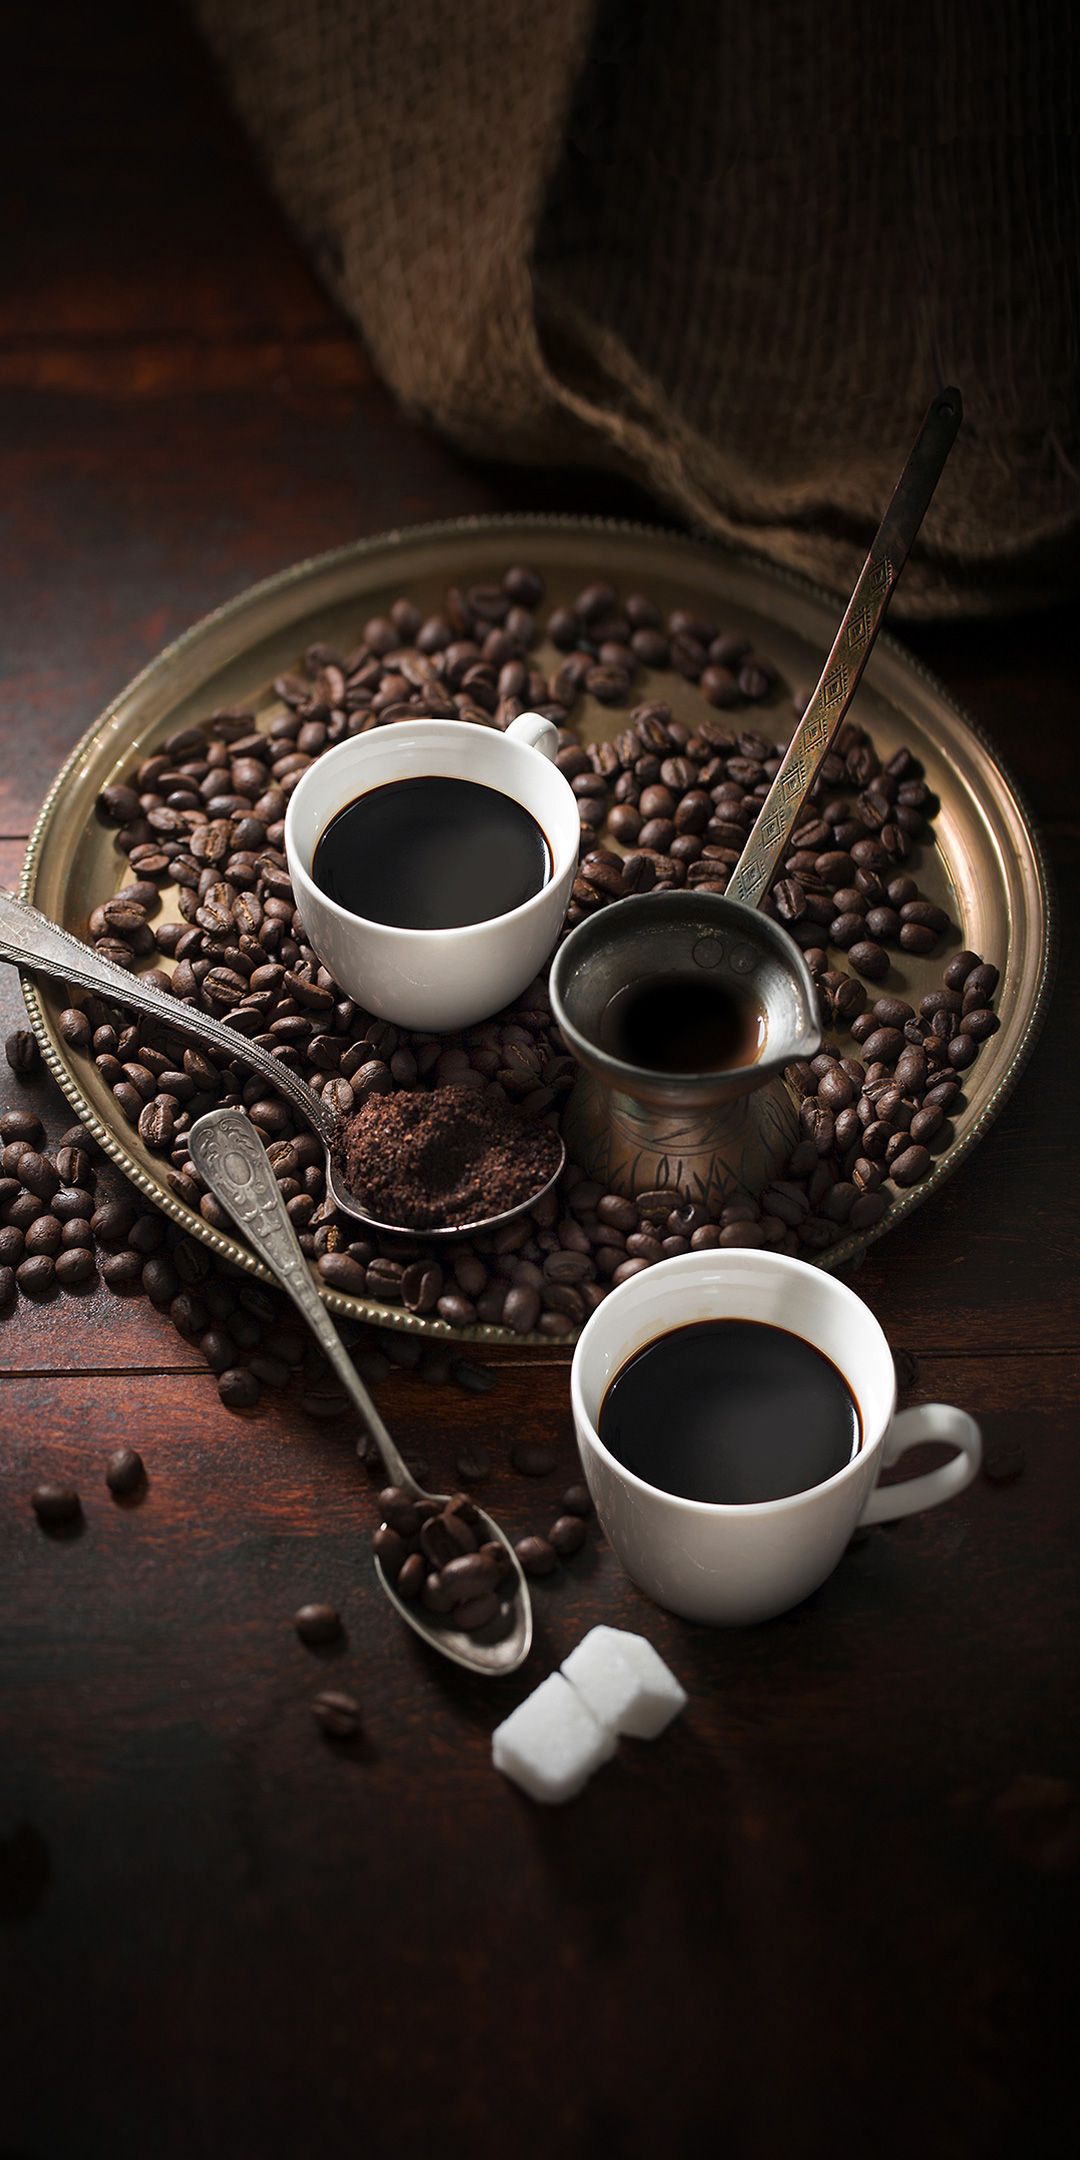 vivo stock wallpaper,cup,coffee cup,kopi tubruk,product,caffeine